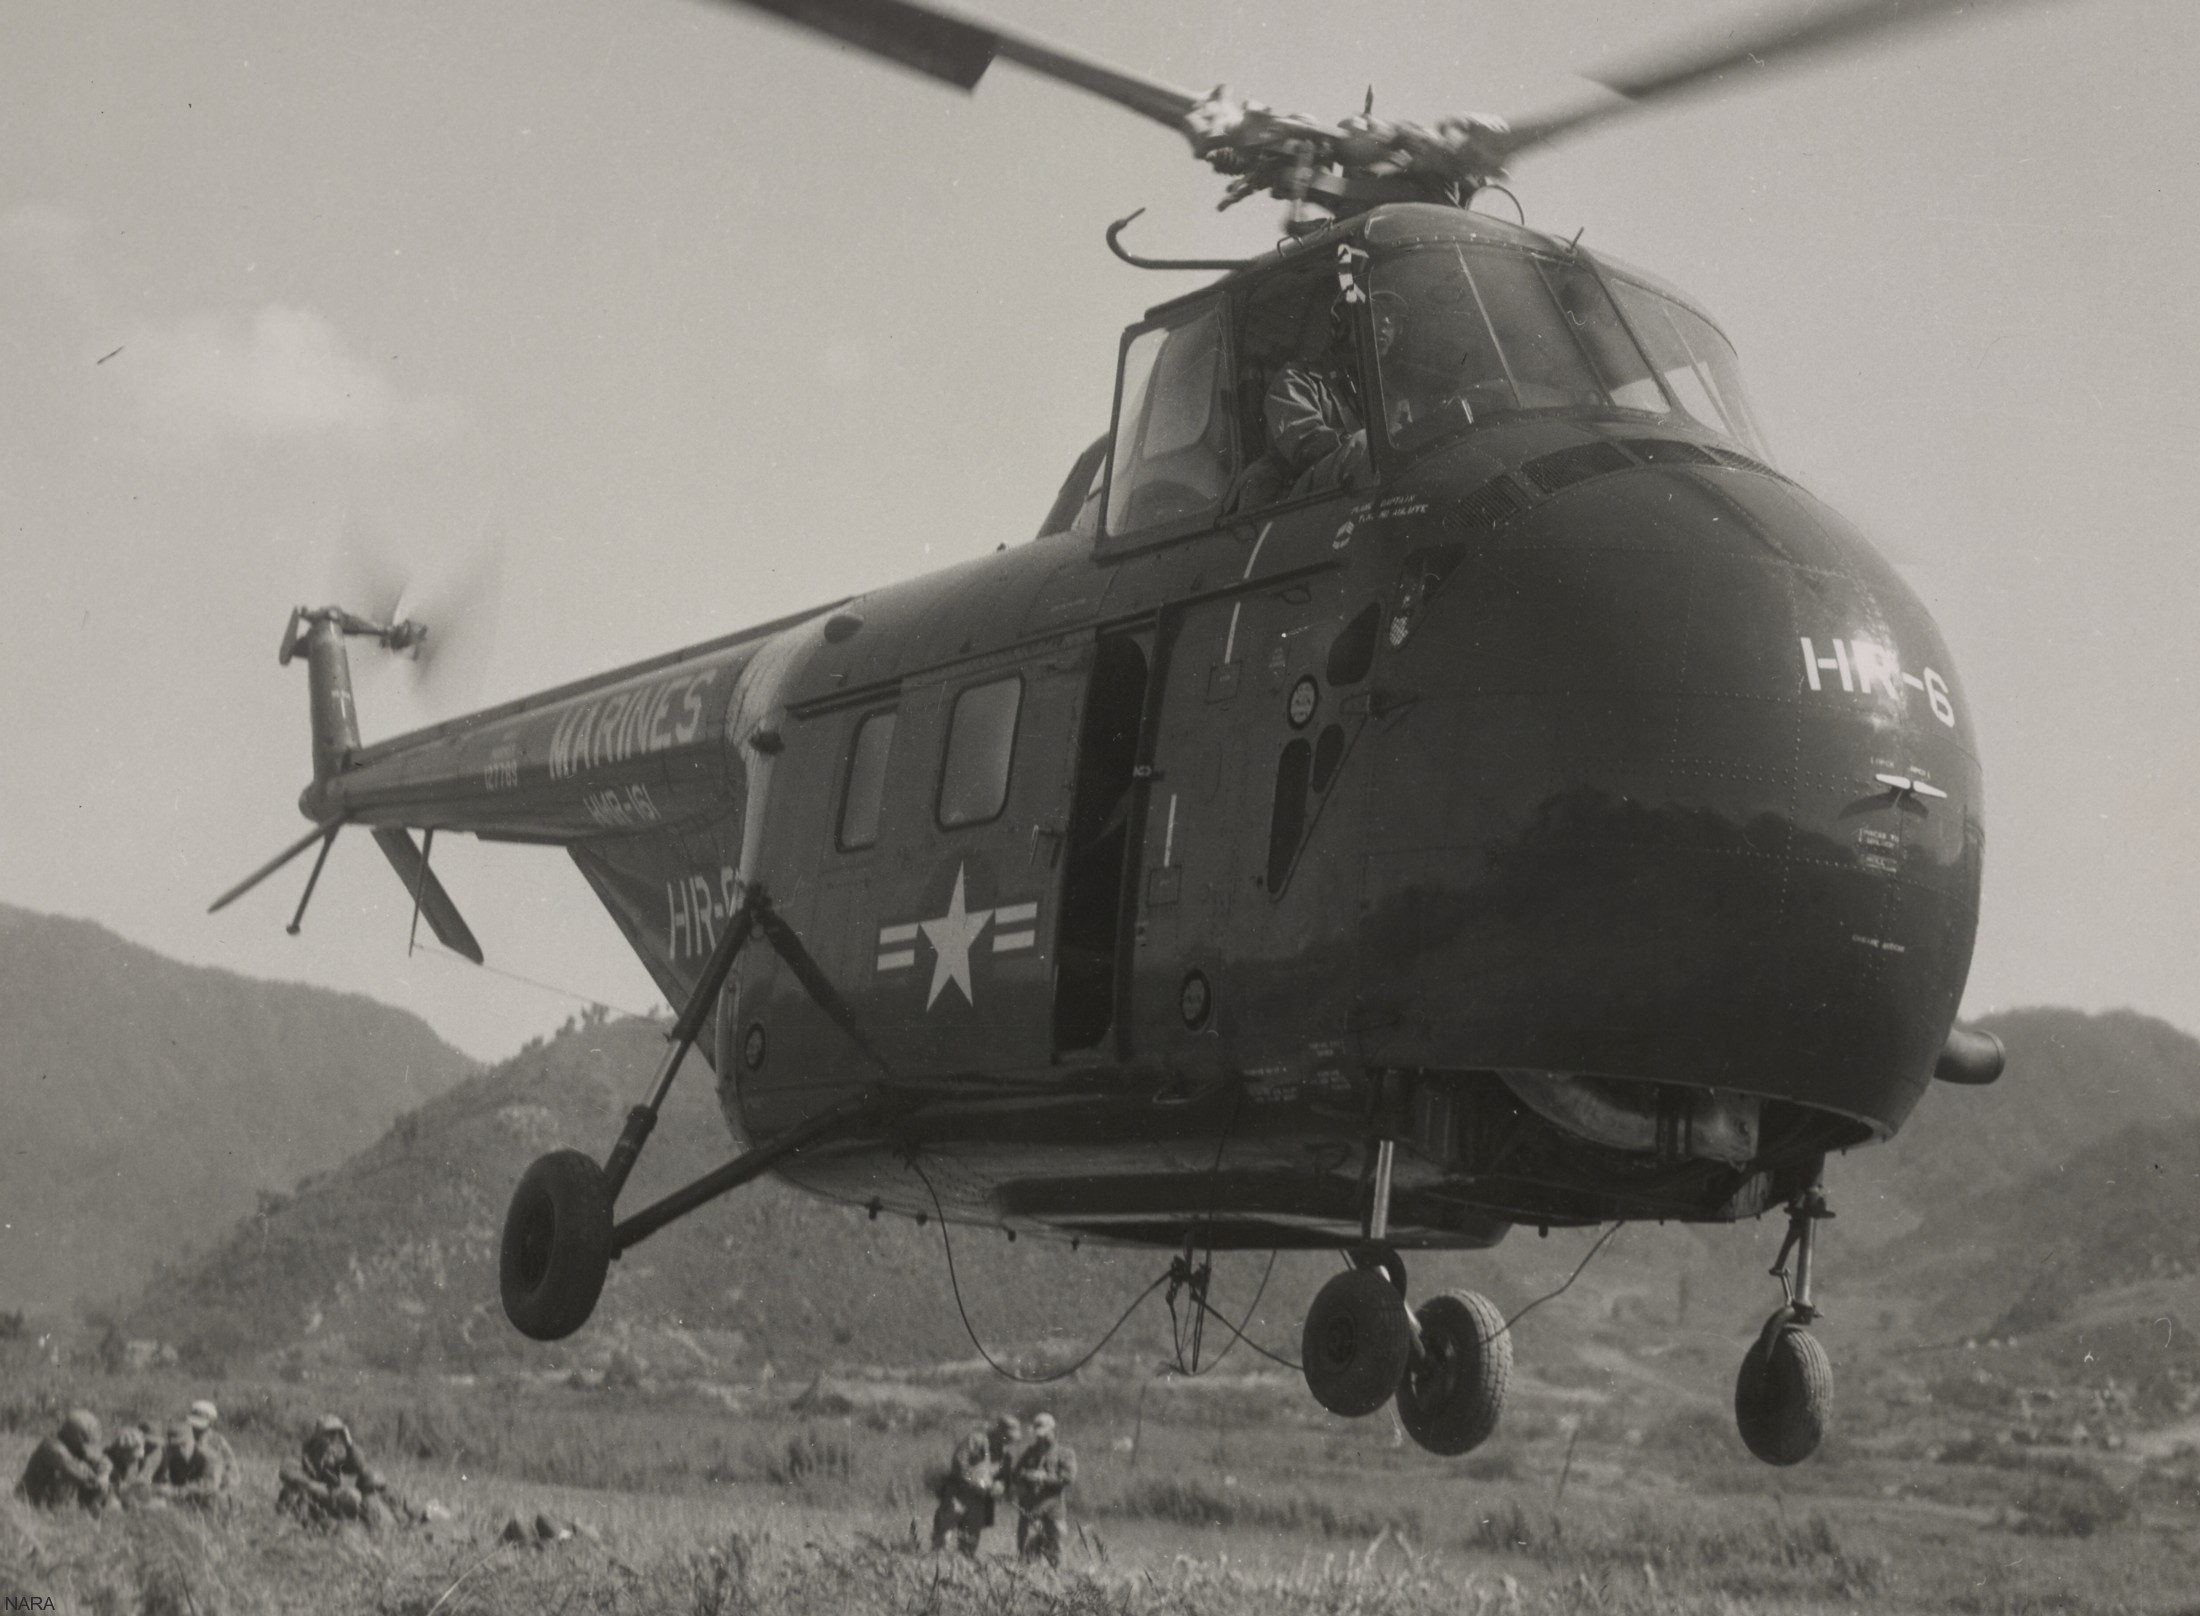 hmr-161 greyhawks marine helicopter transport squadron sikorsky hrs-1 usmc 08 korean war